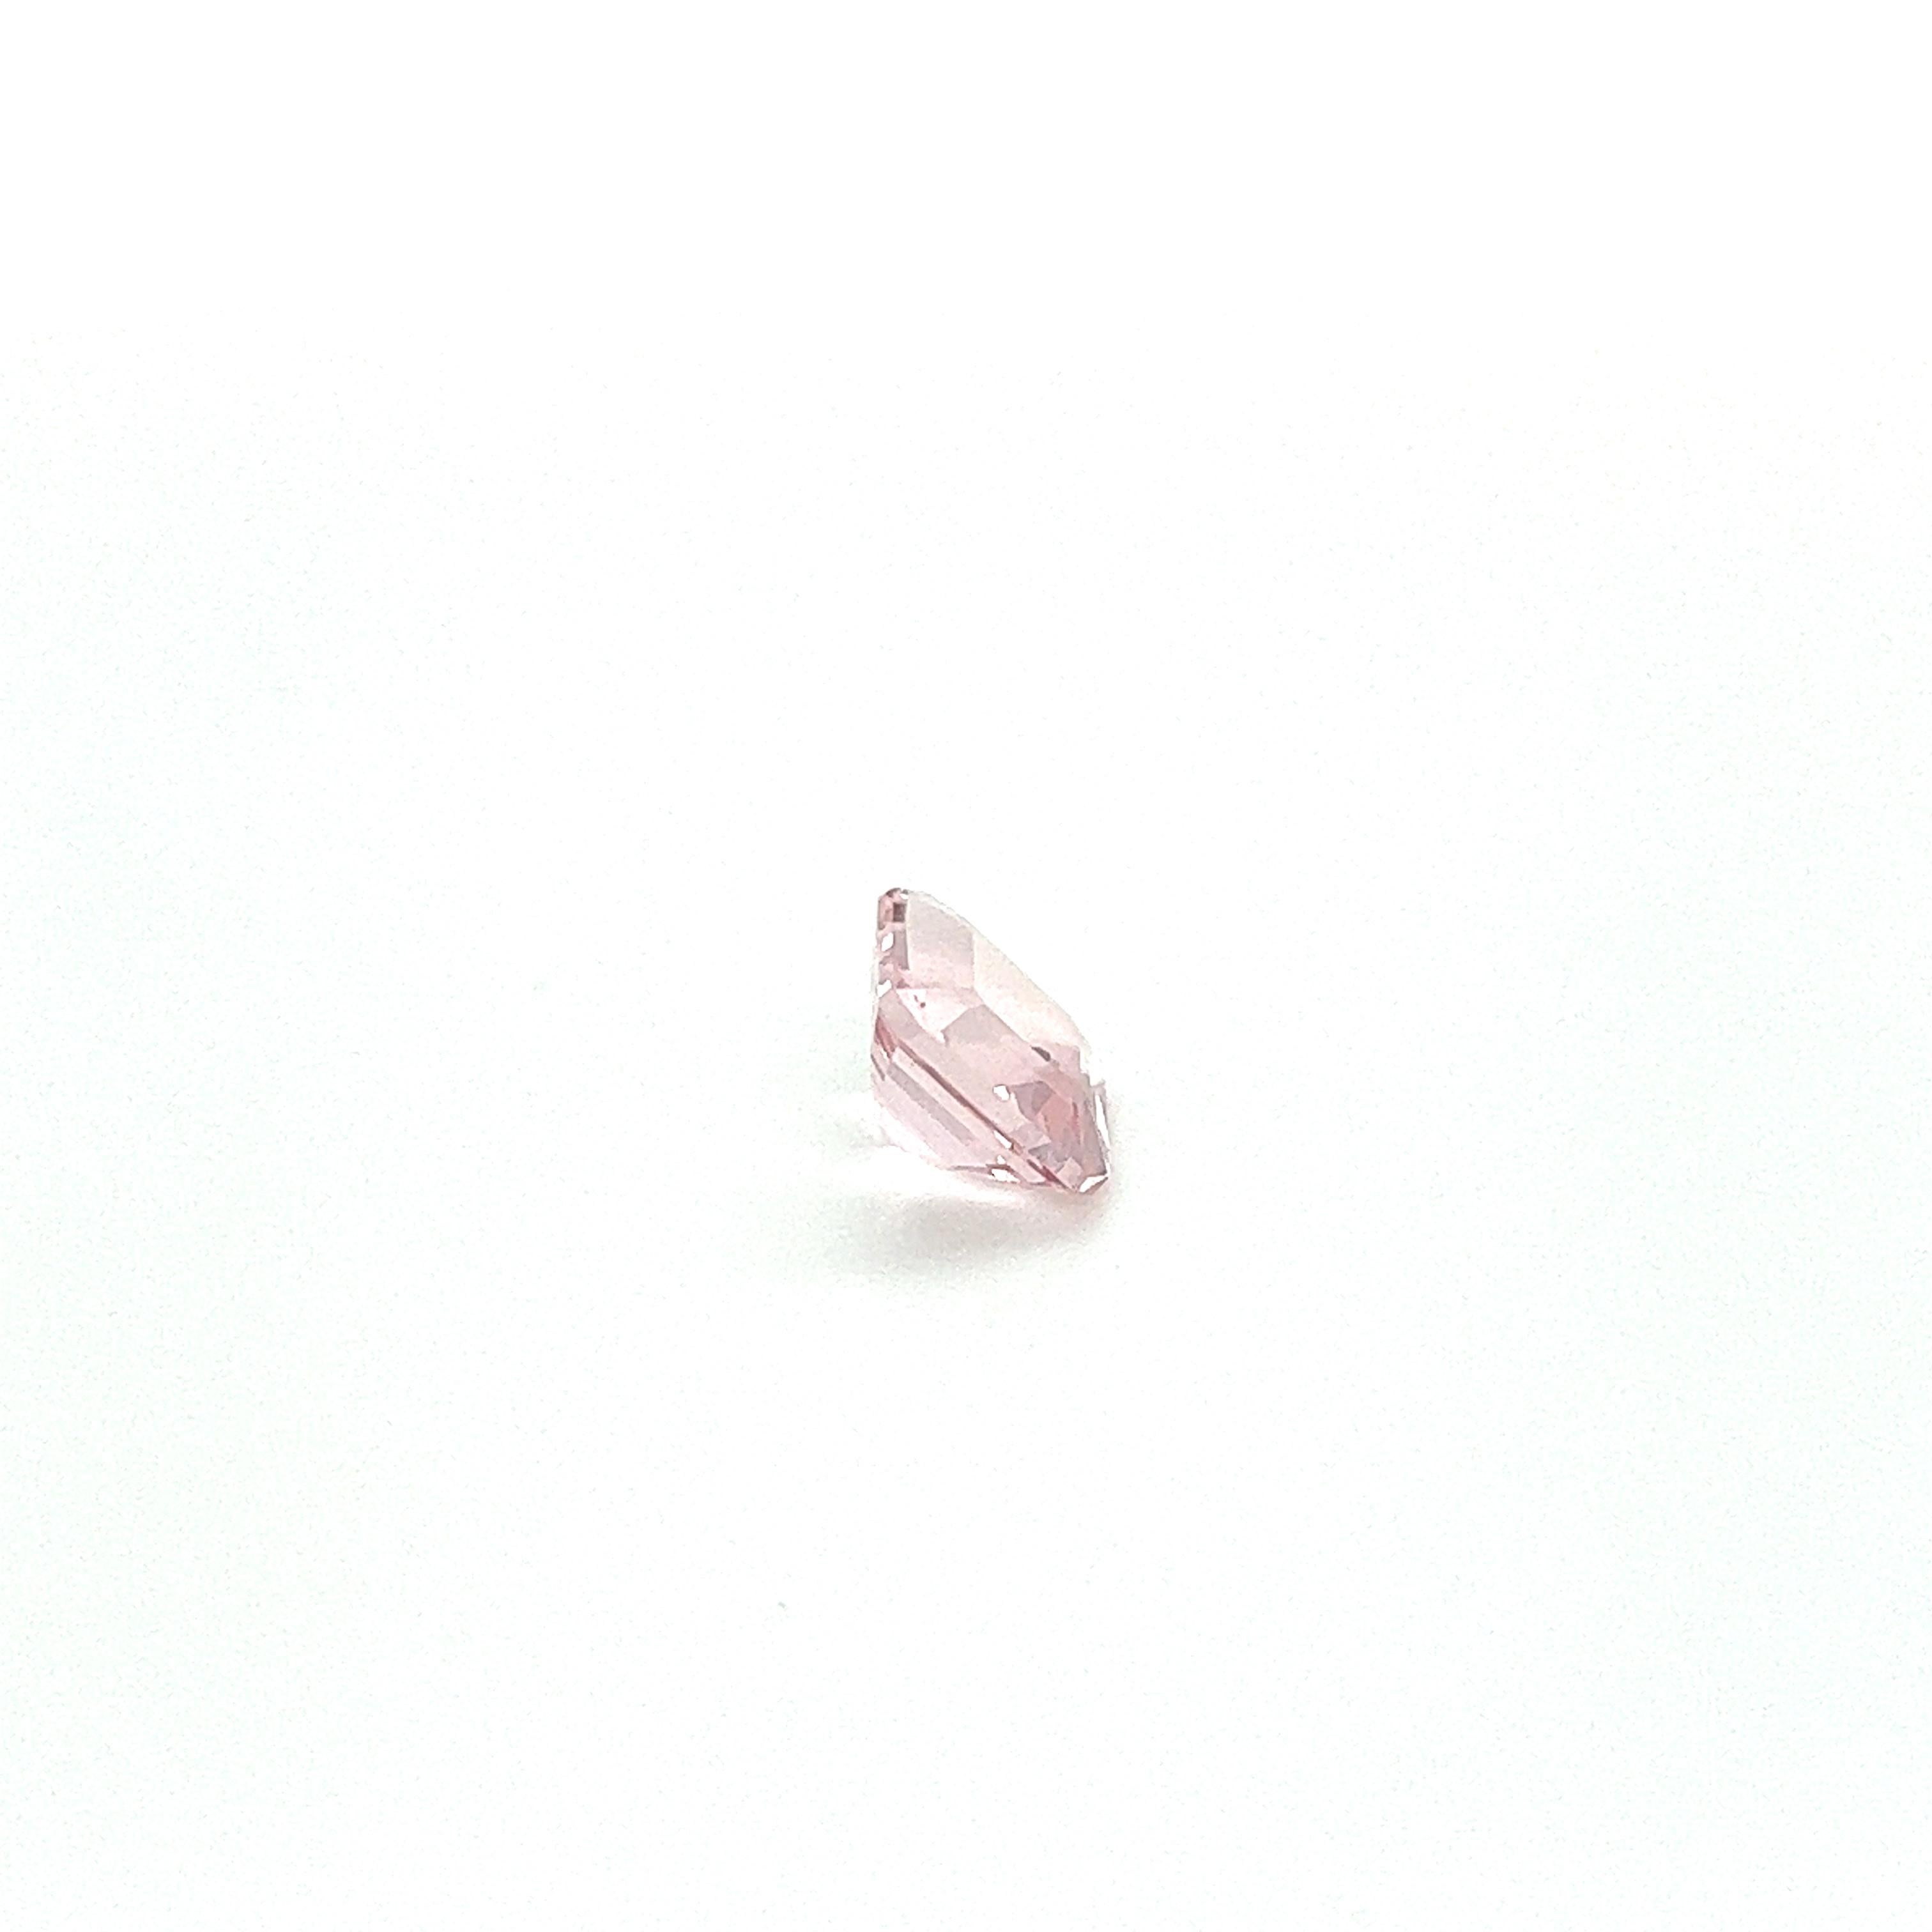 Bijoux de pierres précieuses non serties en forme de cendre en morganite rose naturelle de 2,24 carats AAA Neuf - En vente à New York, NY